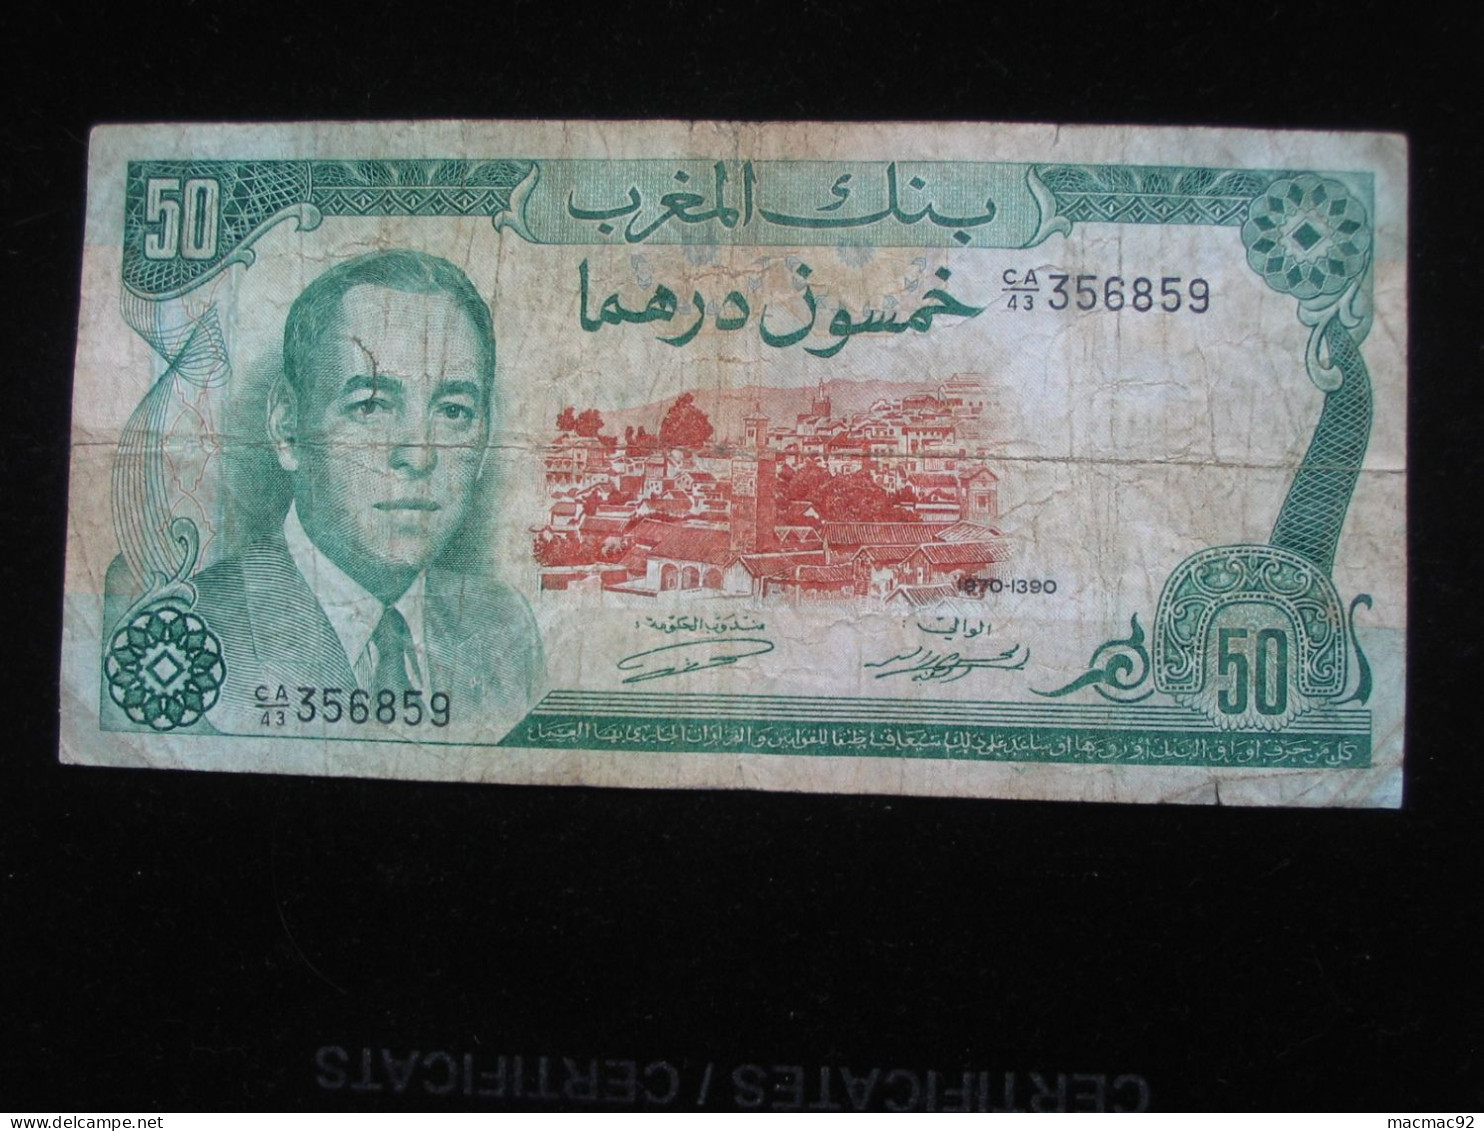 50 Dirhams 1970-1390 Maroc - Banque Du Maroc **** EN ACHAT IMMEDIAT **** - Maroc